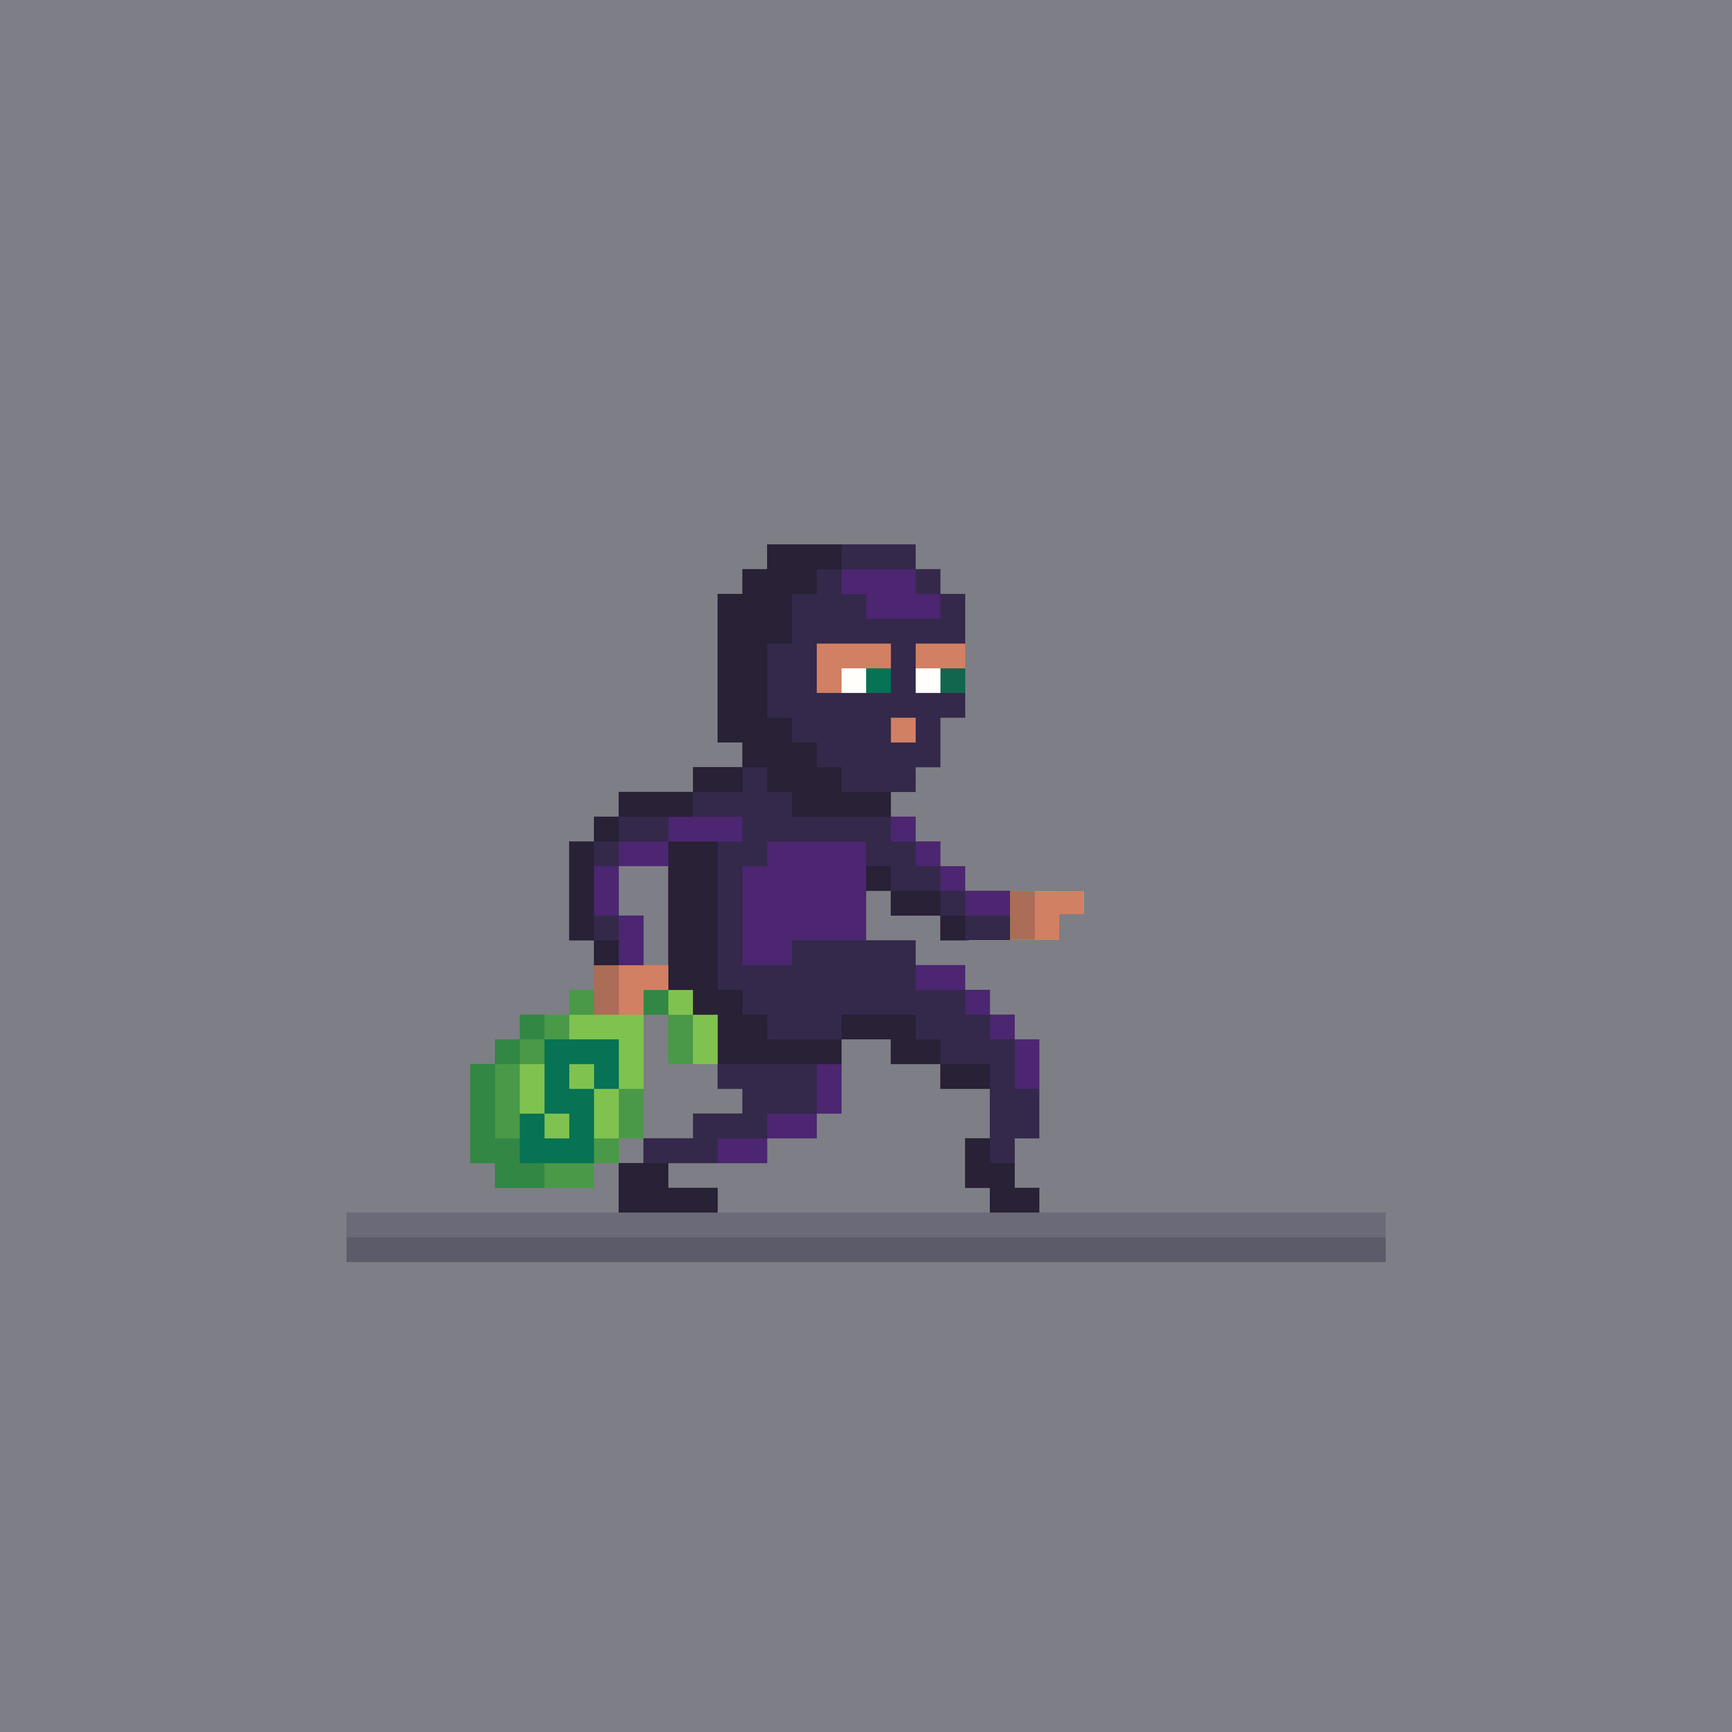 a pixel image of a burglar holding a bag of money